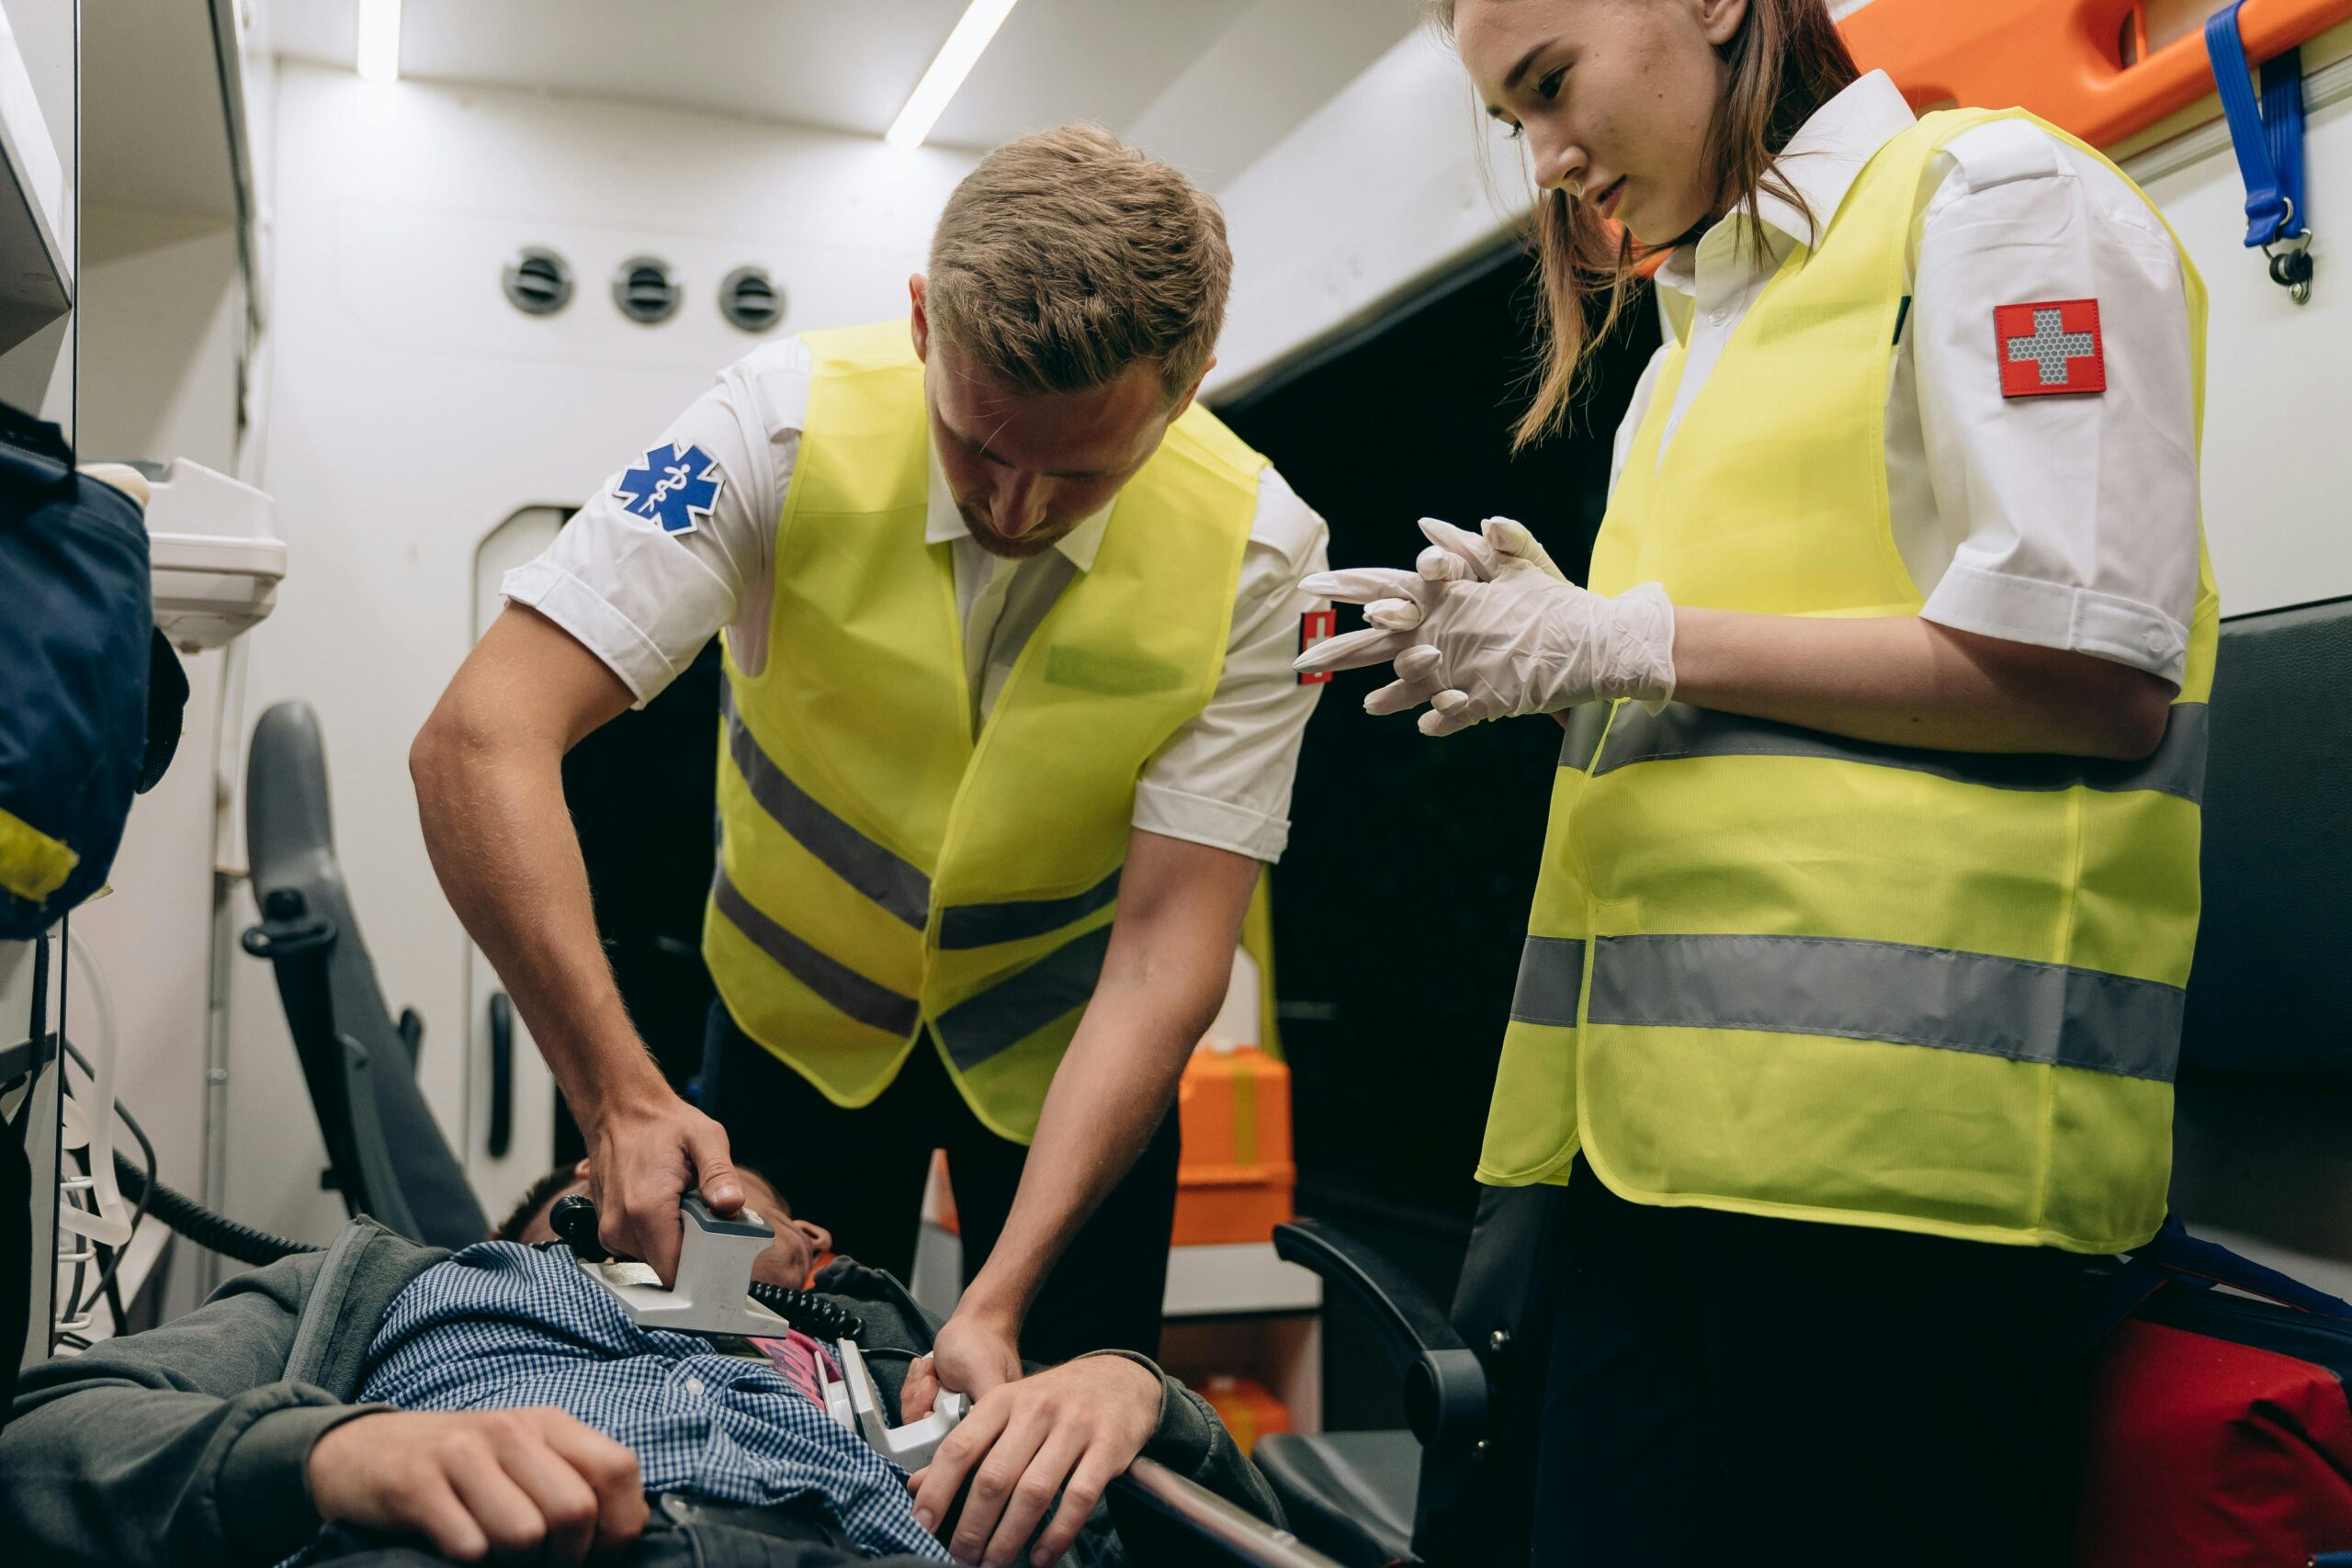 EMTs using a defibrillator